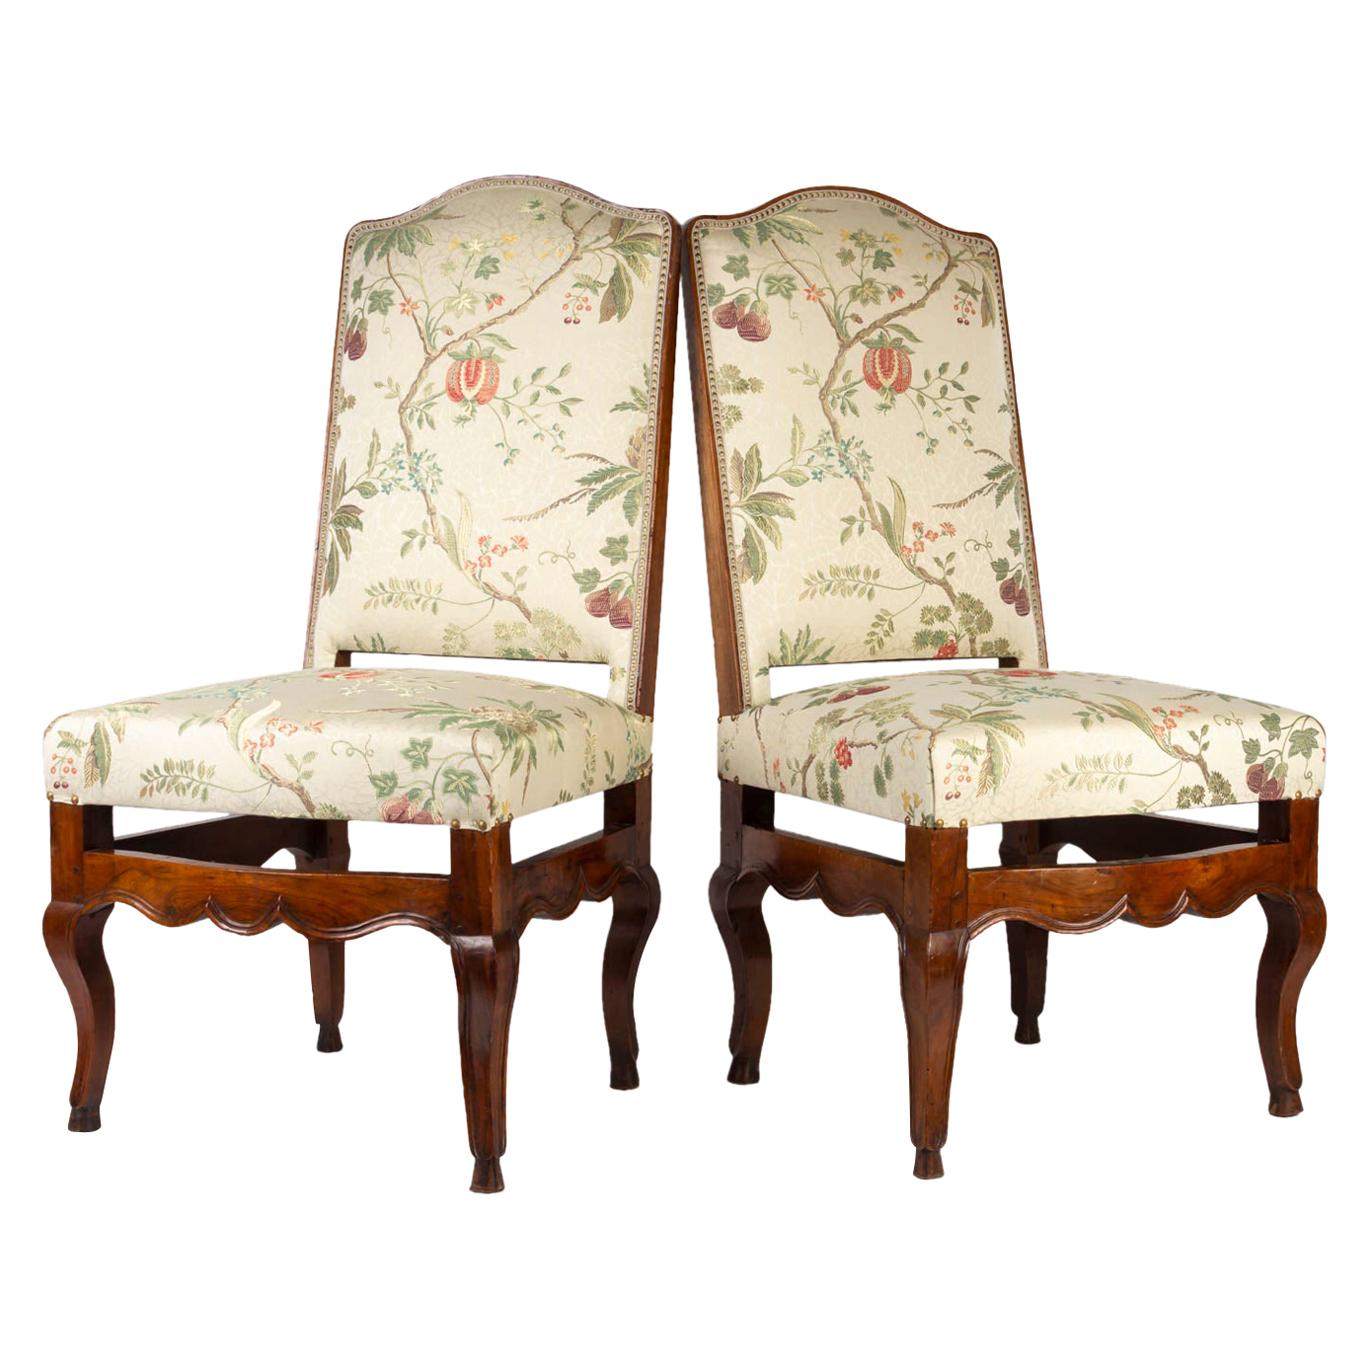 Pair of Walnut Provençal Chairs, 18th Century Period